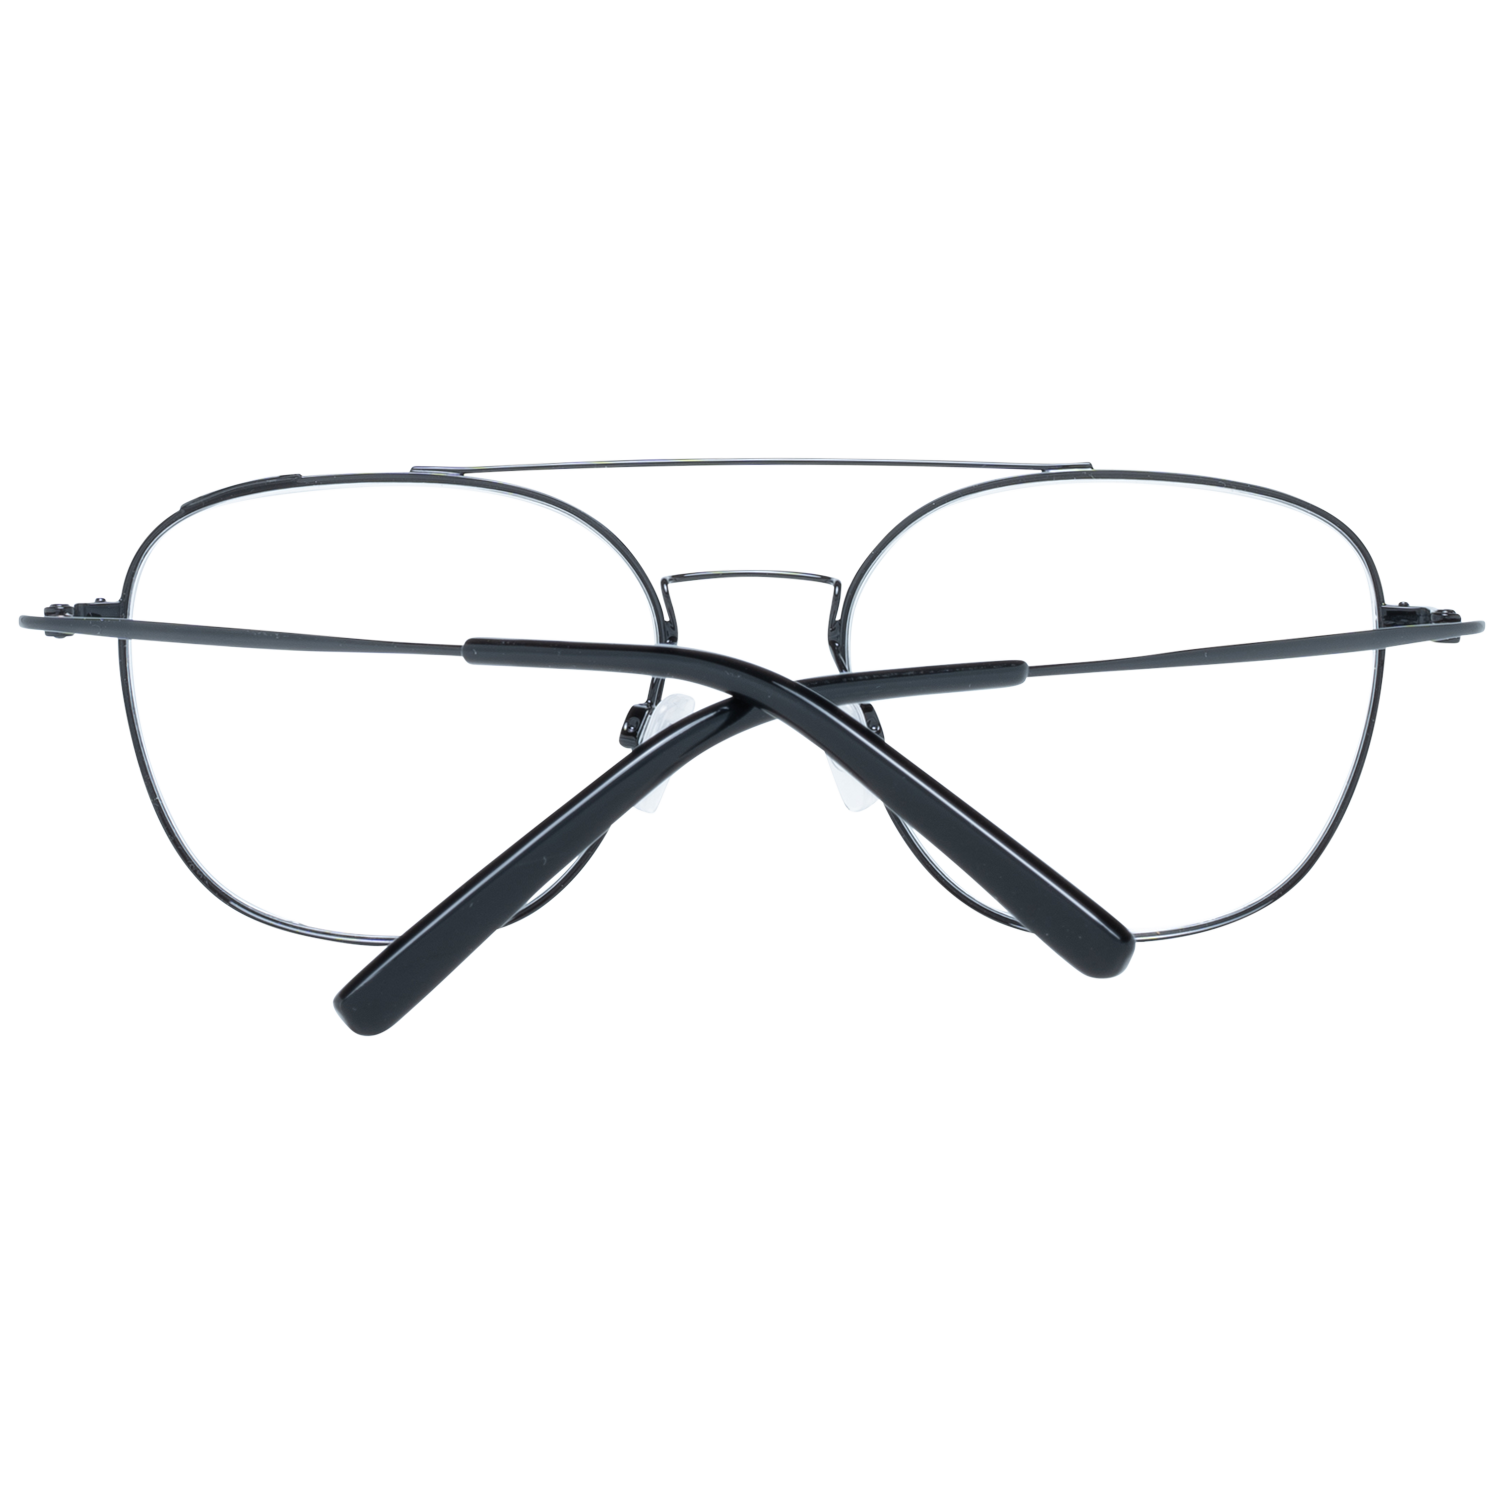 Bally Optical Frame Bally Eyeglasses Frames BY5005-D 001 Men Eyeglasses Eyewear UK USA Australia 